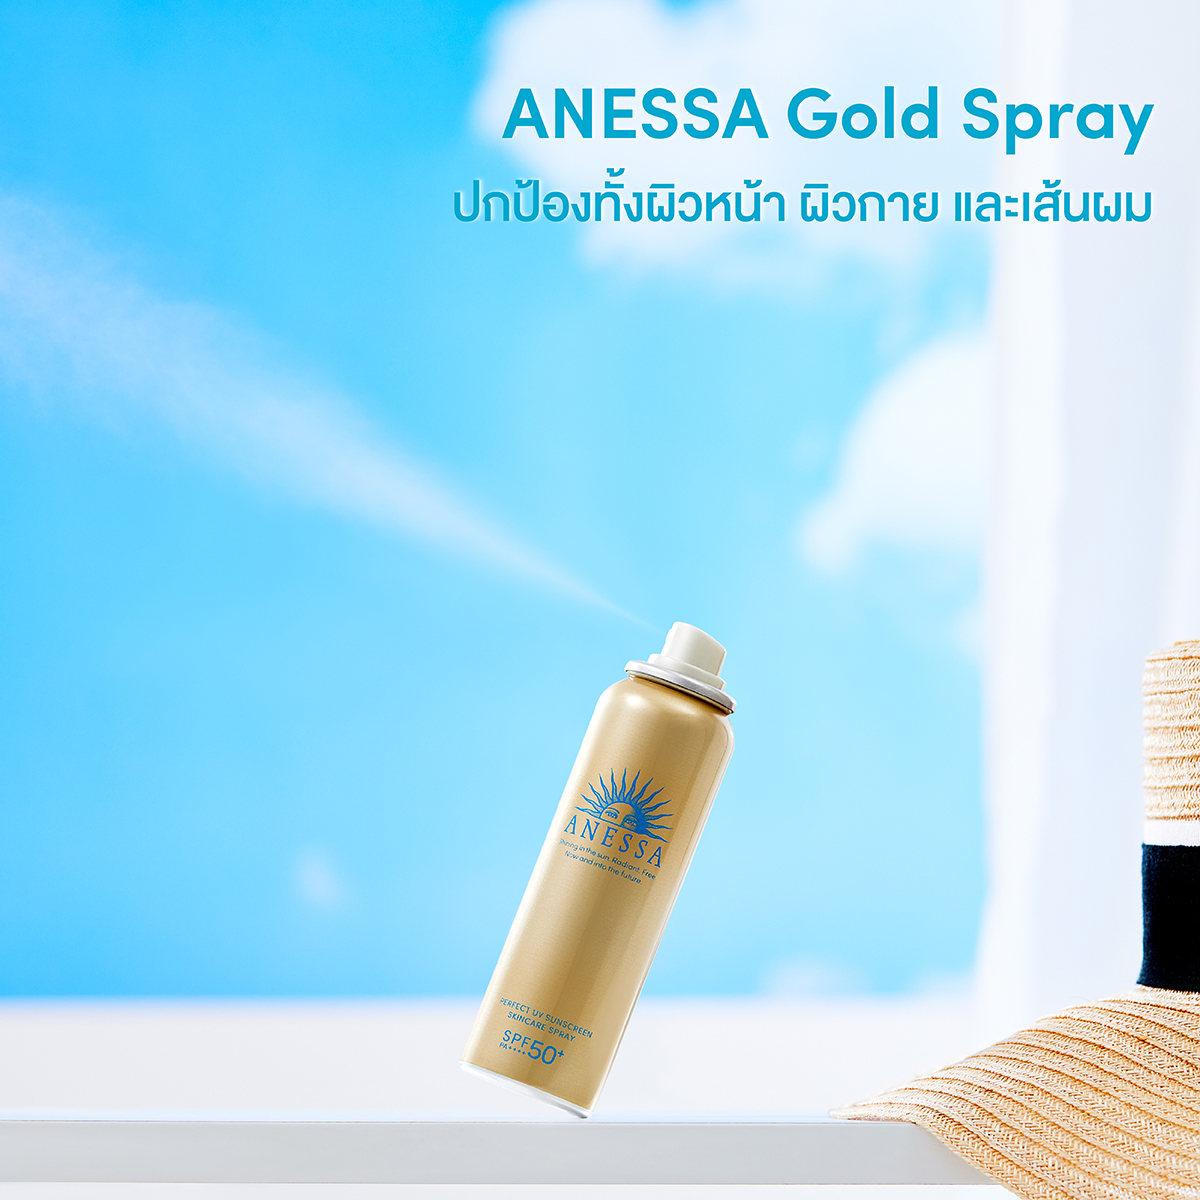 Anessa Perfect UV Sunscreen Skincare Spray N 